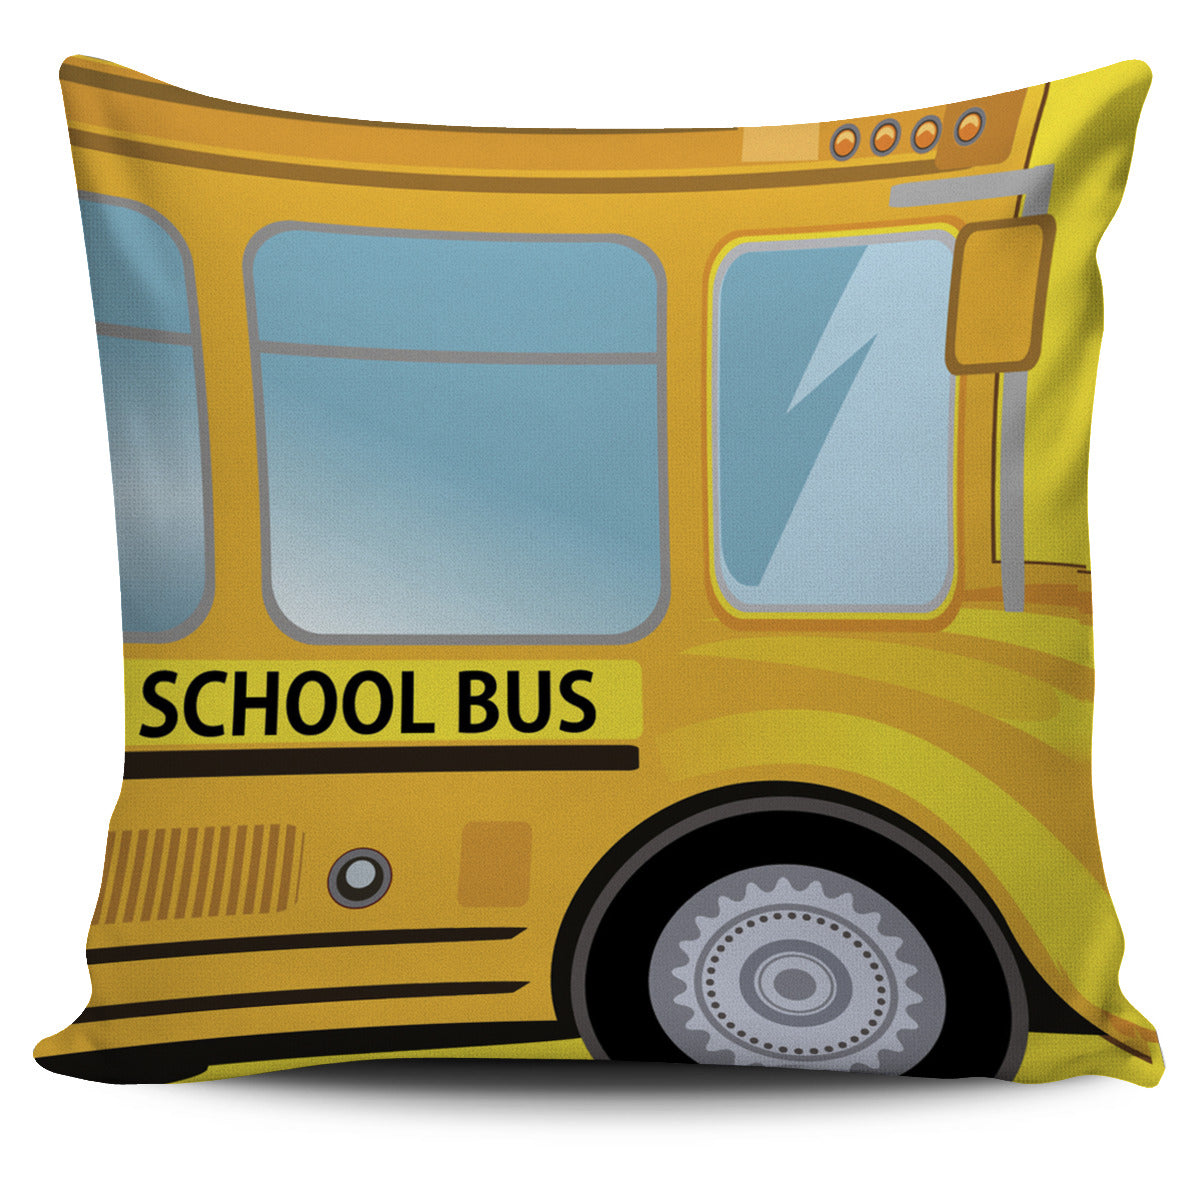 School Bus Pillow Cover